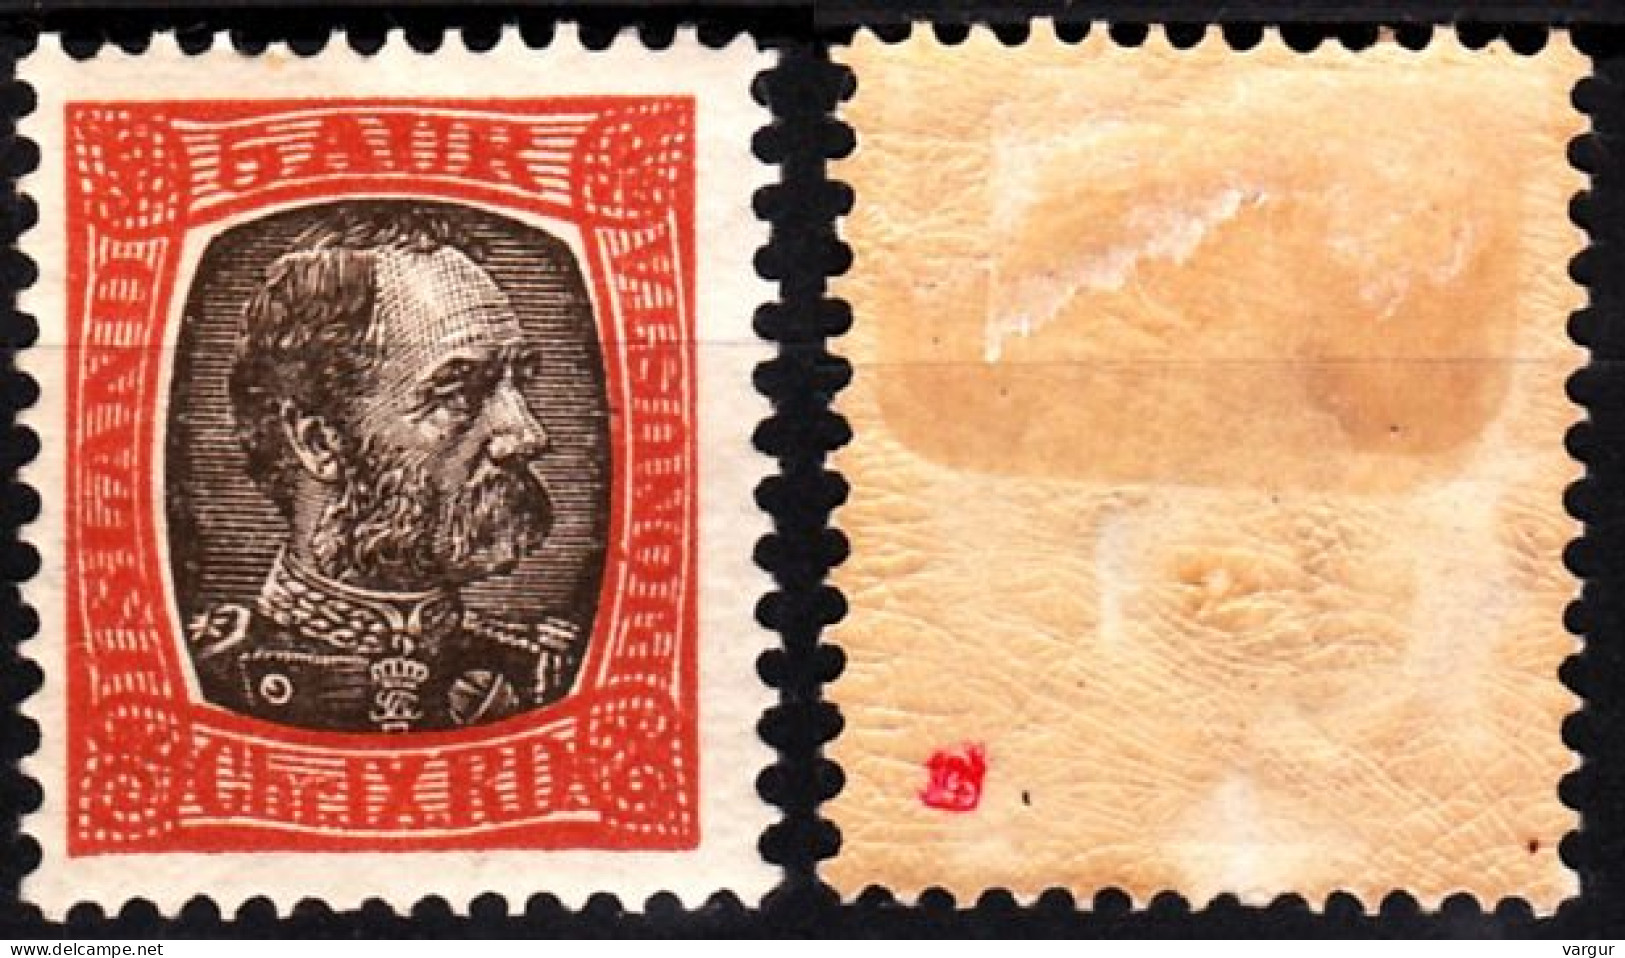 ICELAND / ISLAND Postage Due 1902 King Christian IX, 5Aur, MH Proved - Dienstmarken